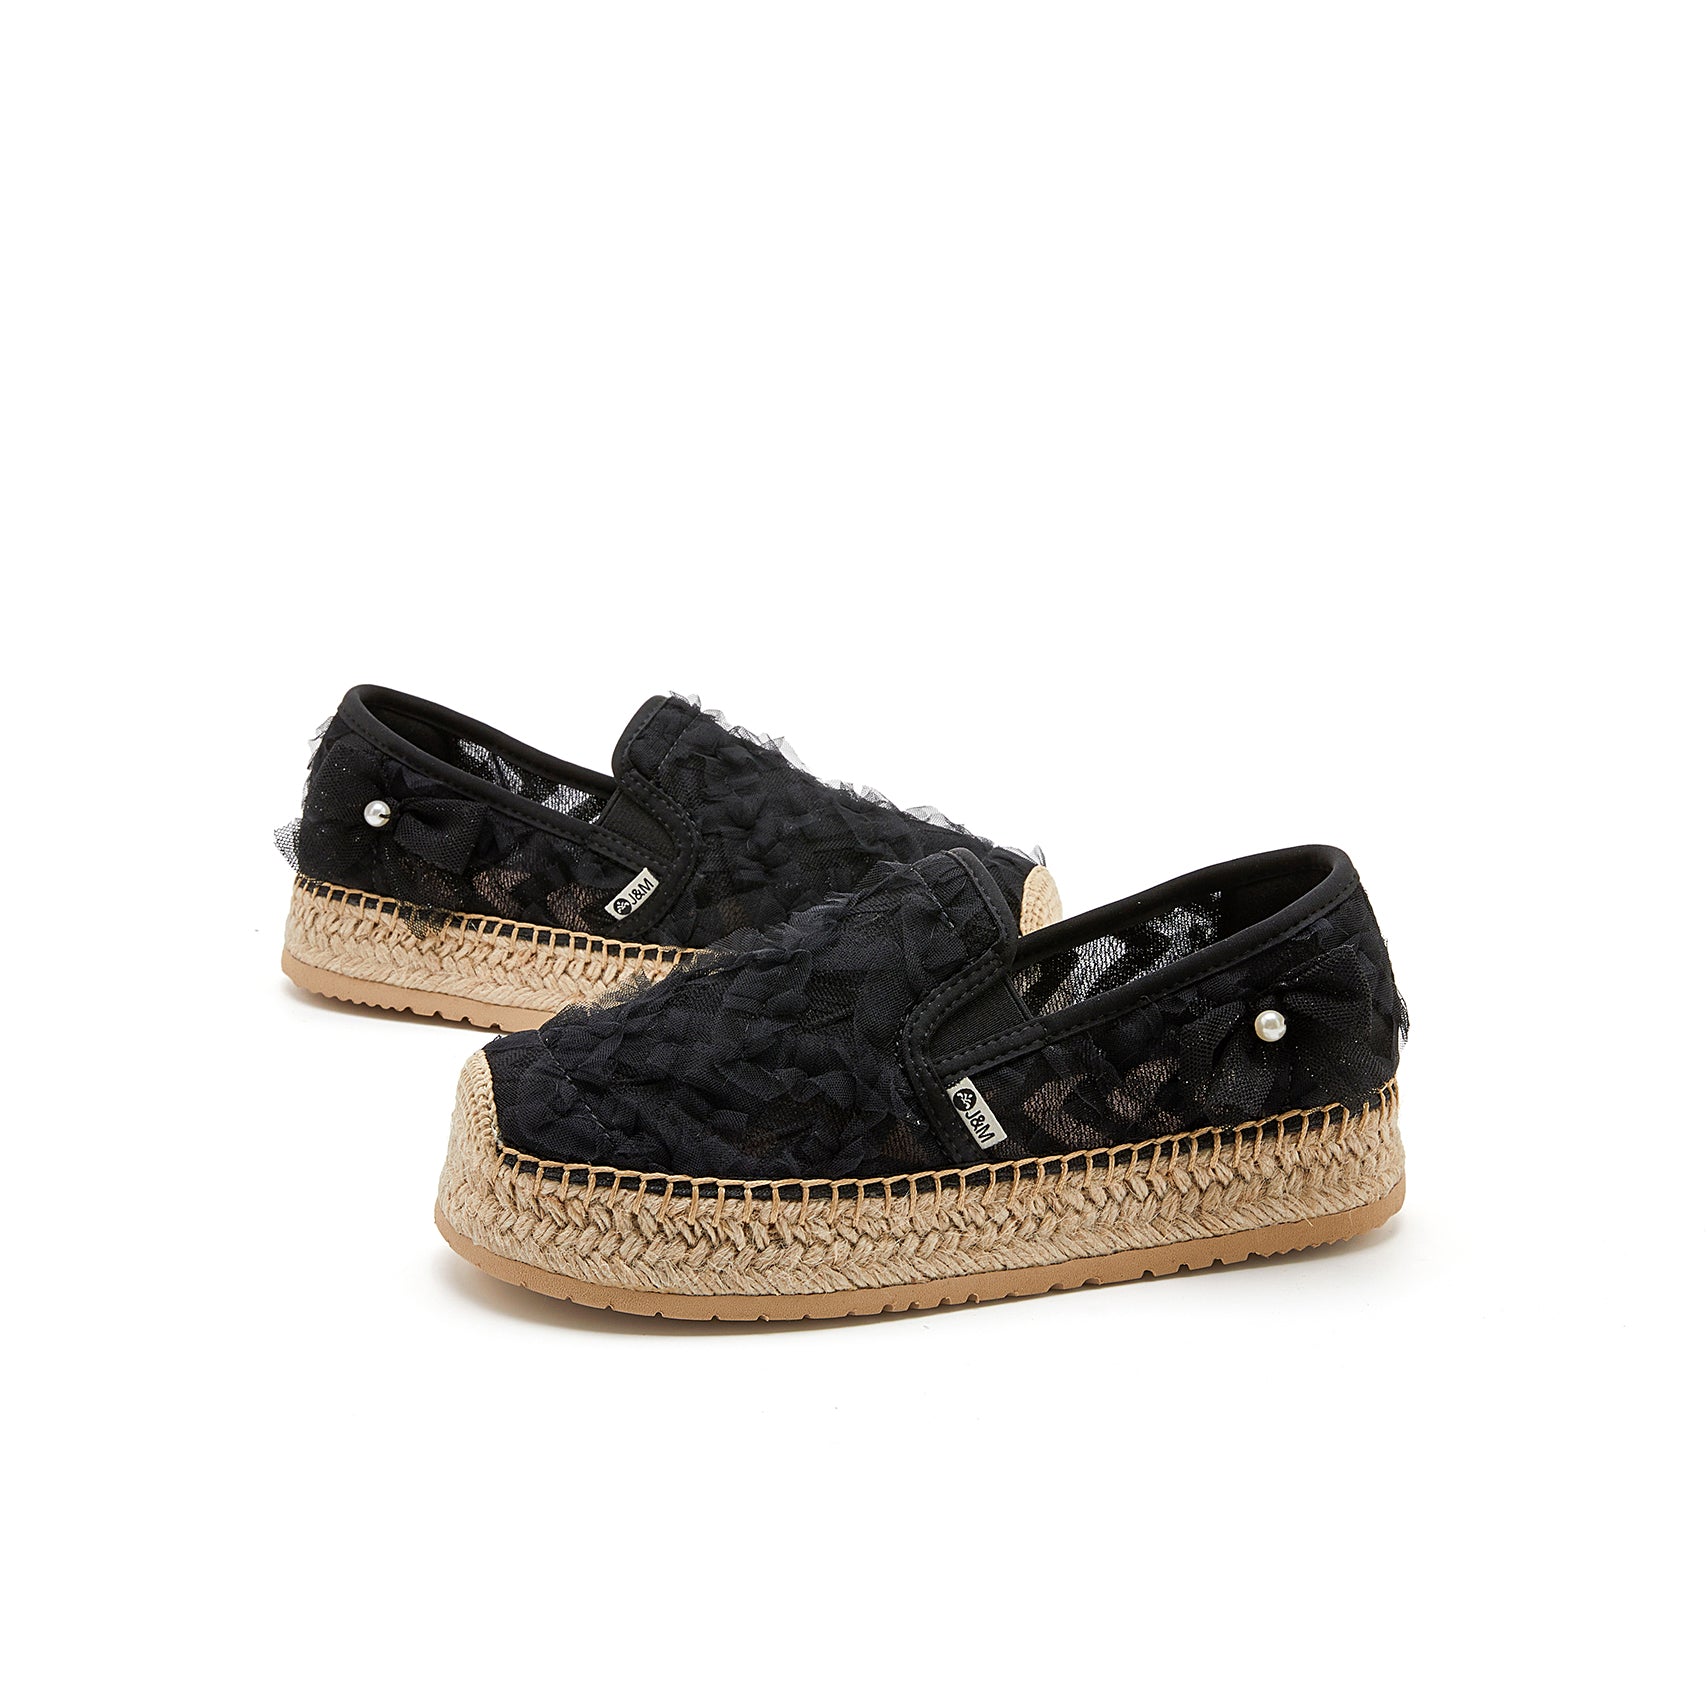 JOY&MARIO Handmade Women’s Slip-On Espadrille Mesh Loafers in Black-05357W